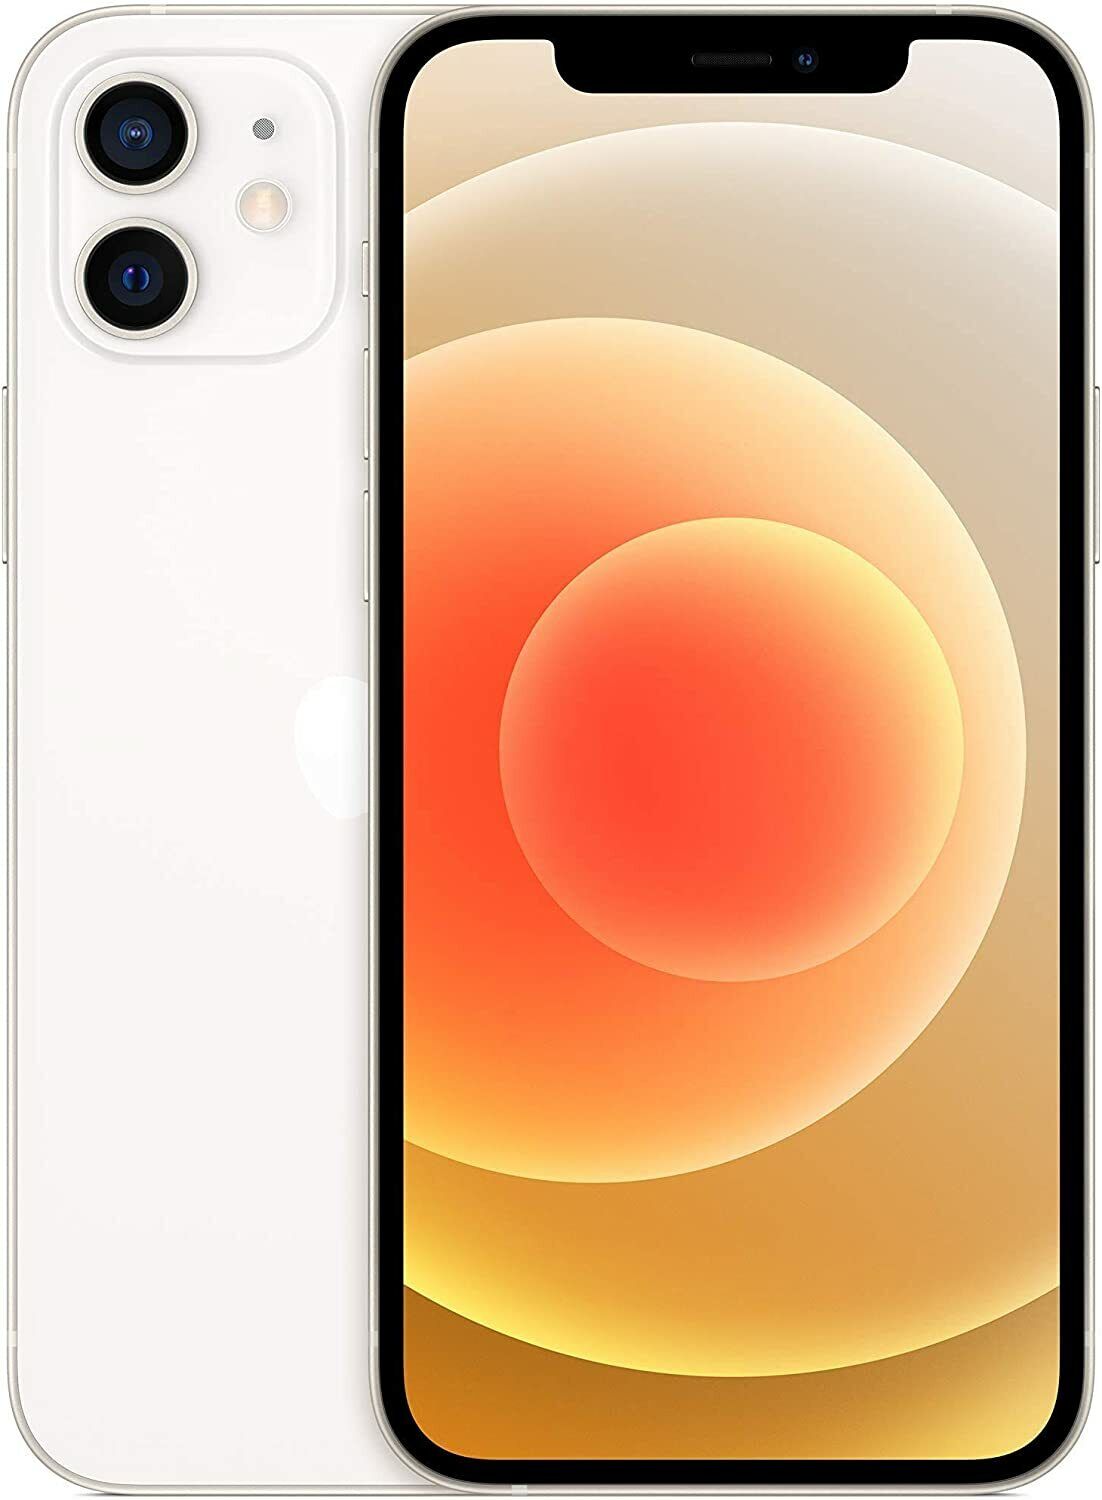 Apple iPhone 12 - 128GB - White (Verizon) for sale online | eBay